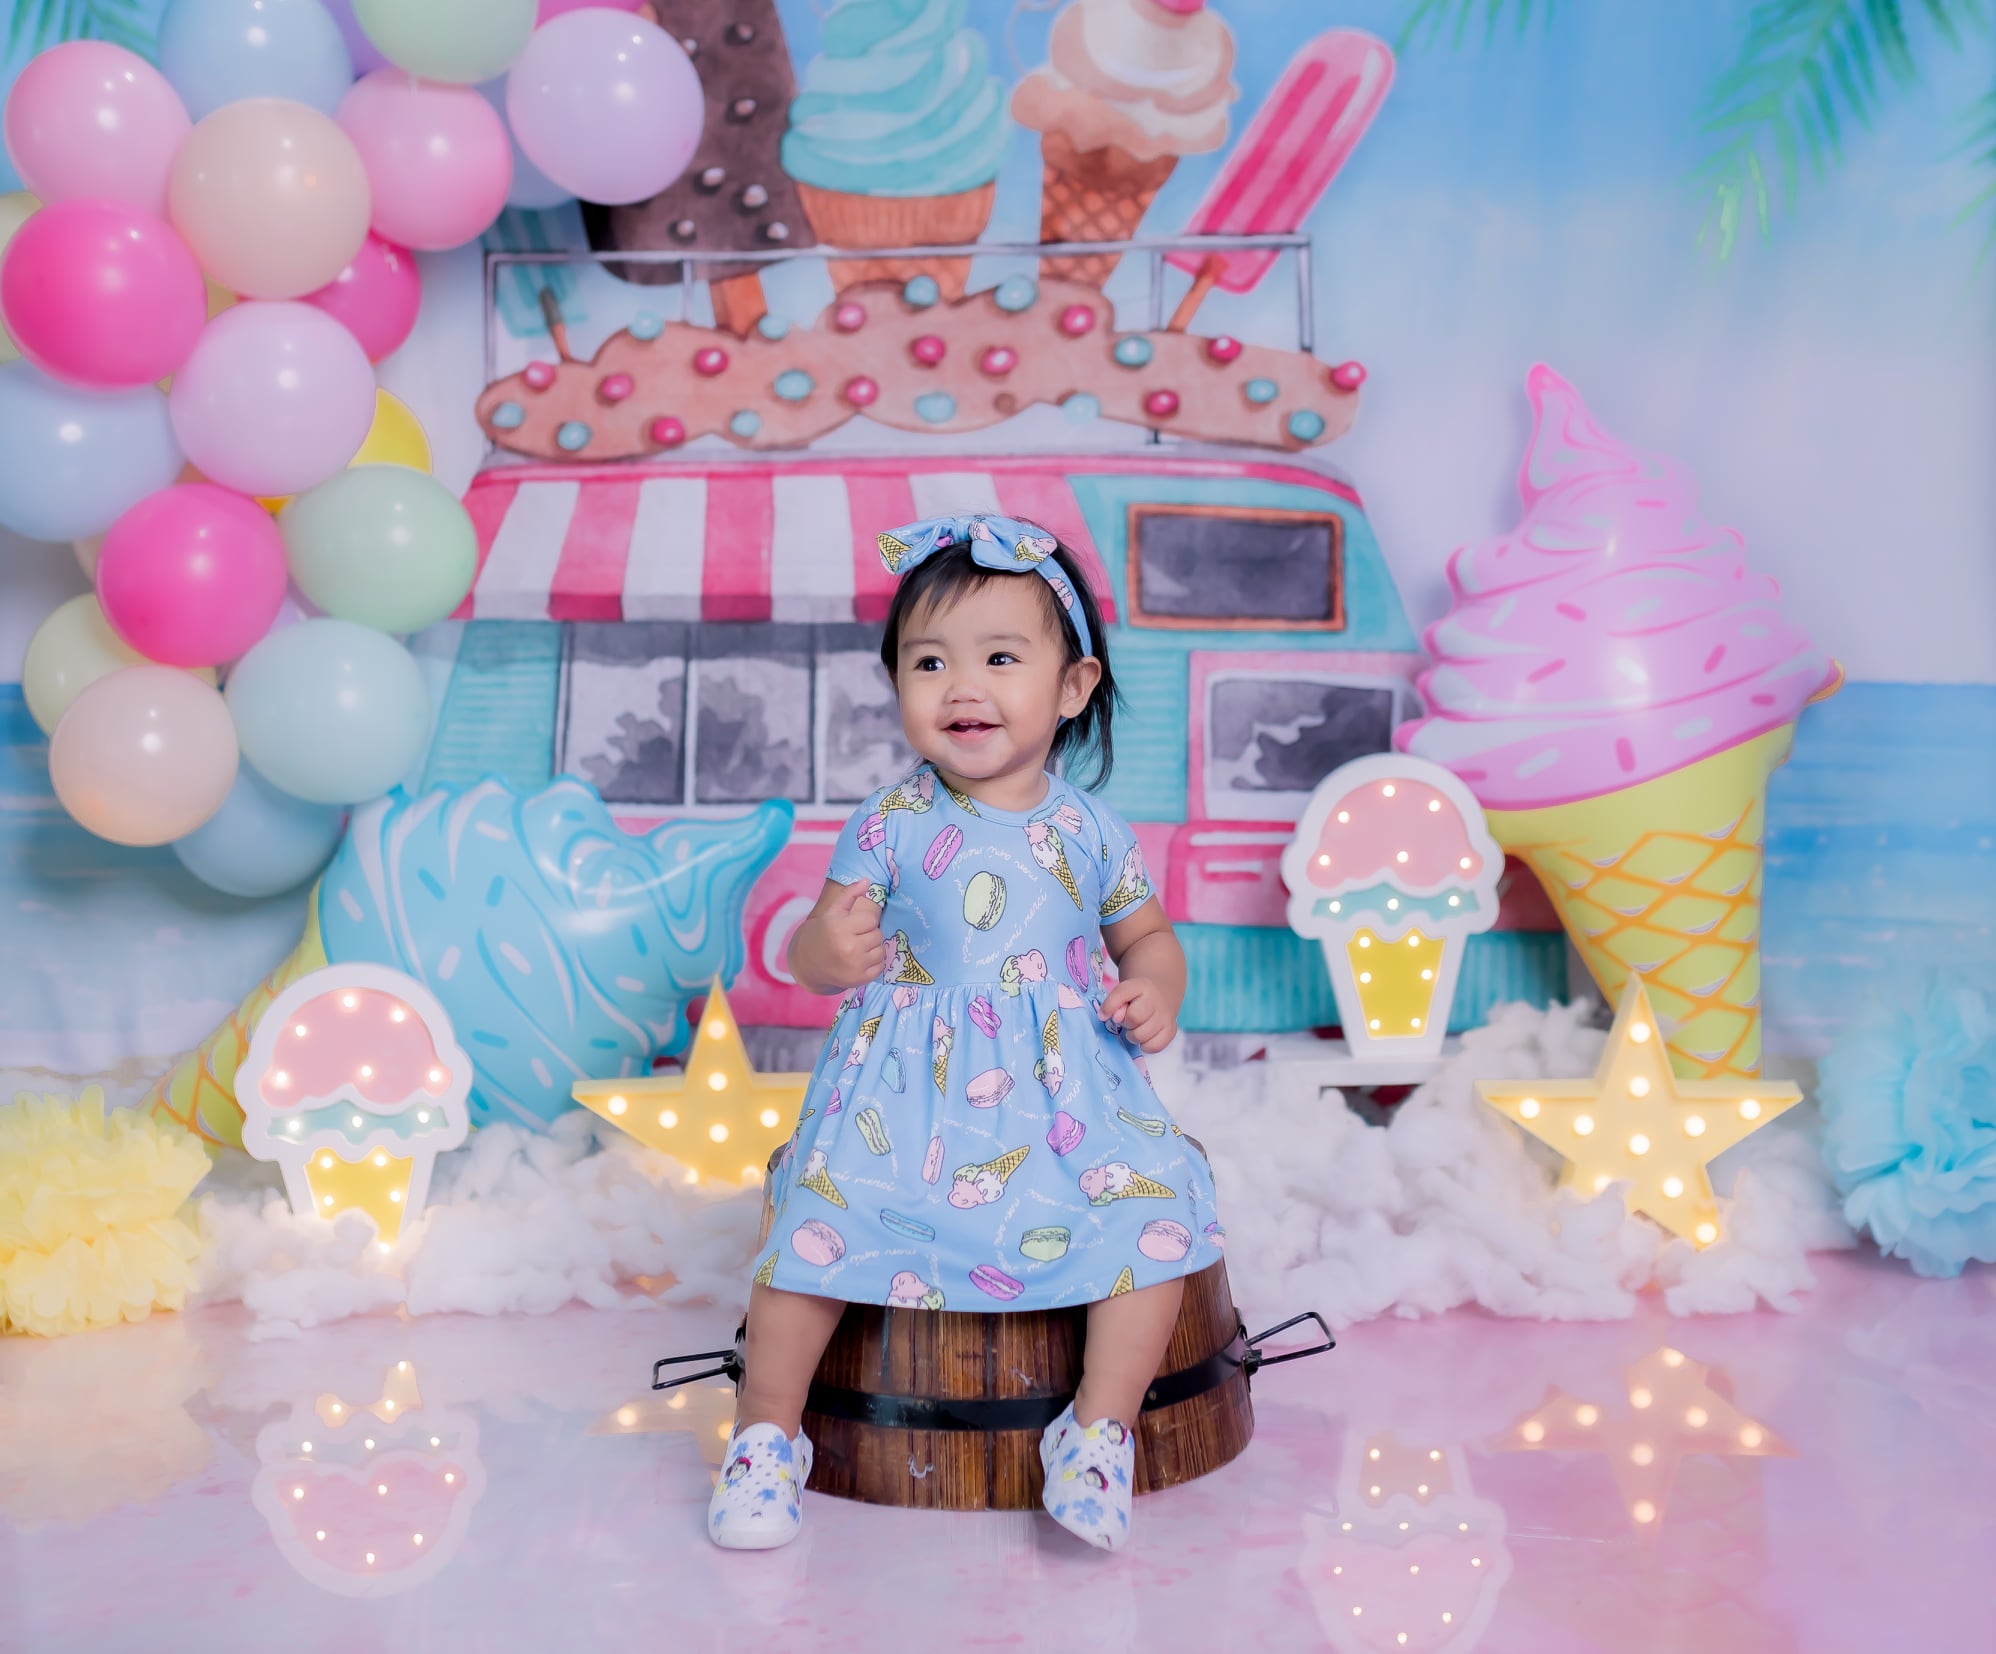 Ice Cream Cart Photo Backdrop Background for Summer Photoshoot Kids